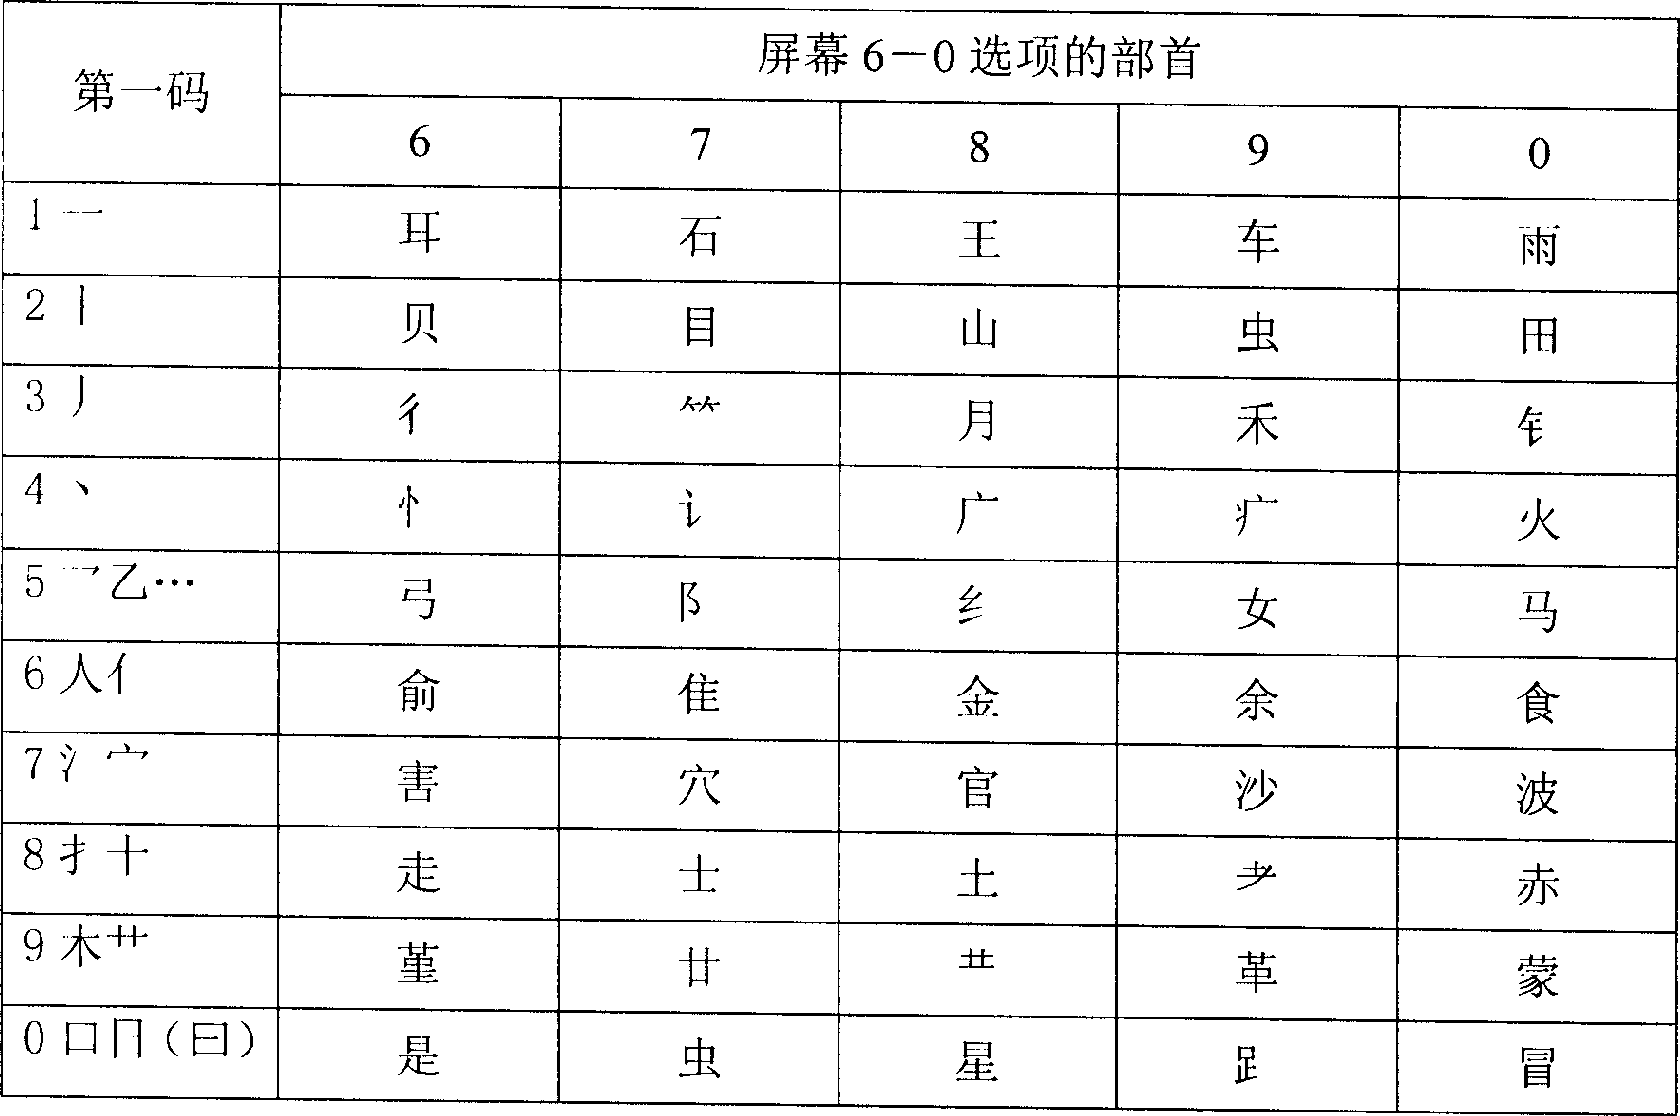 Chinese character input method using digital keyboard